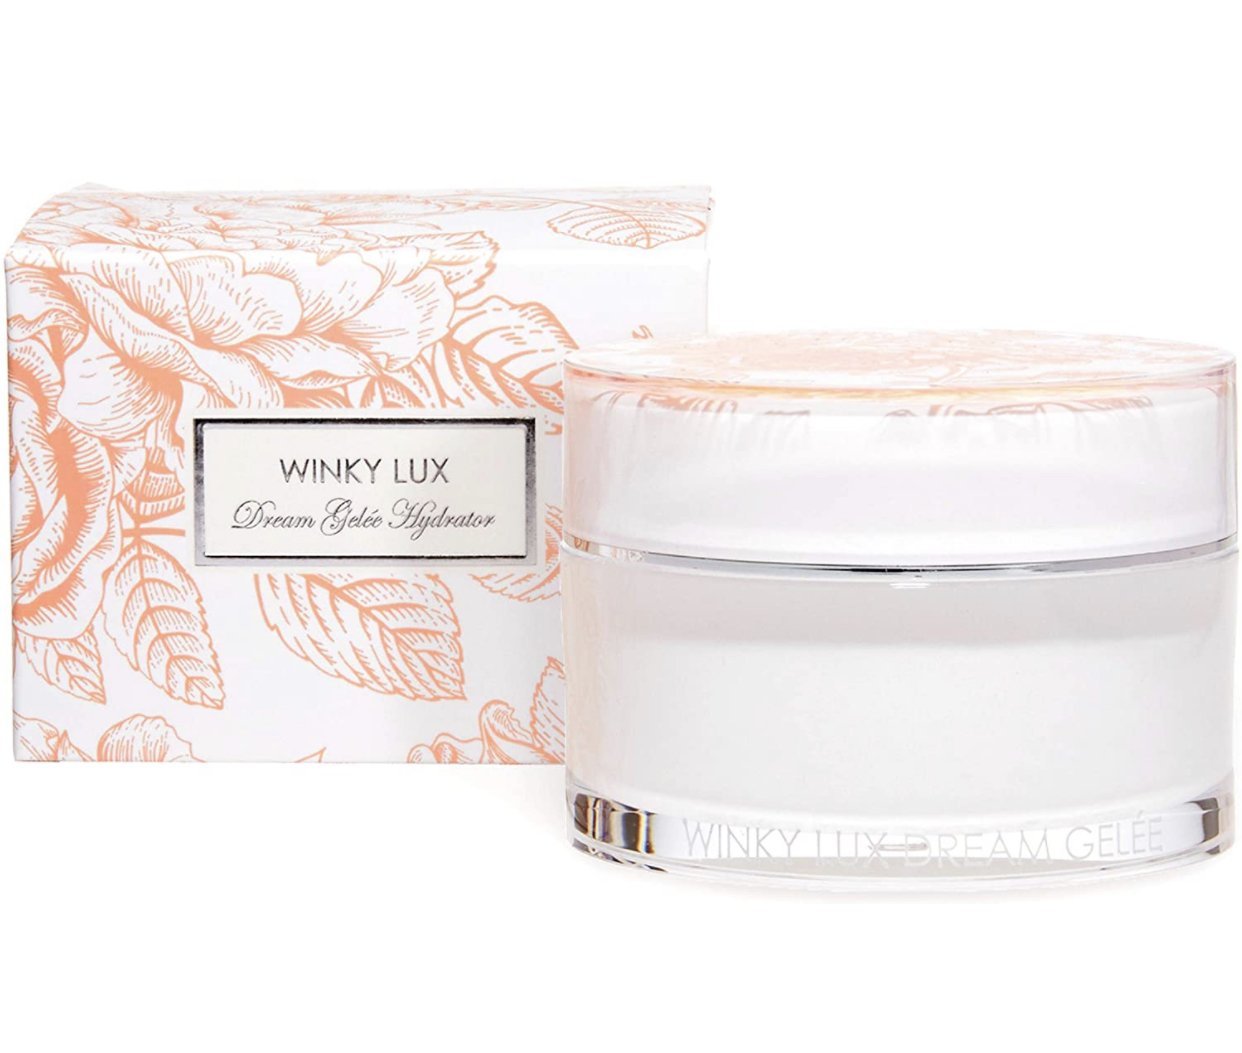 Winky Lux Dream Gelee Hydrator Skincare